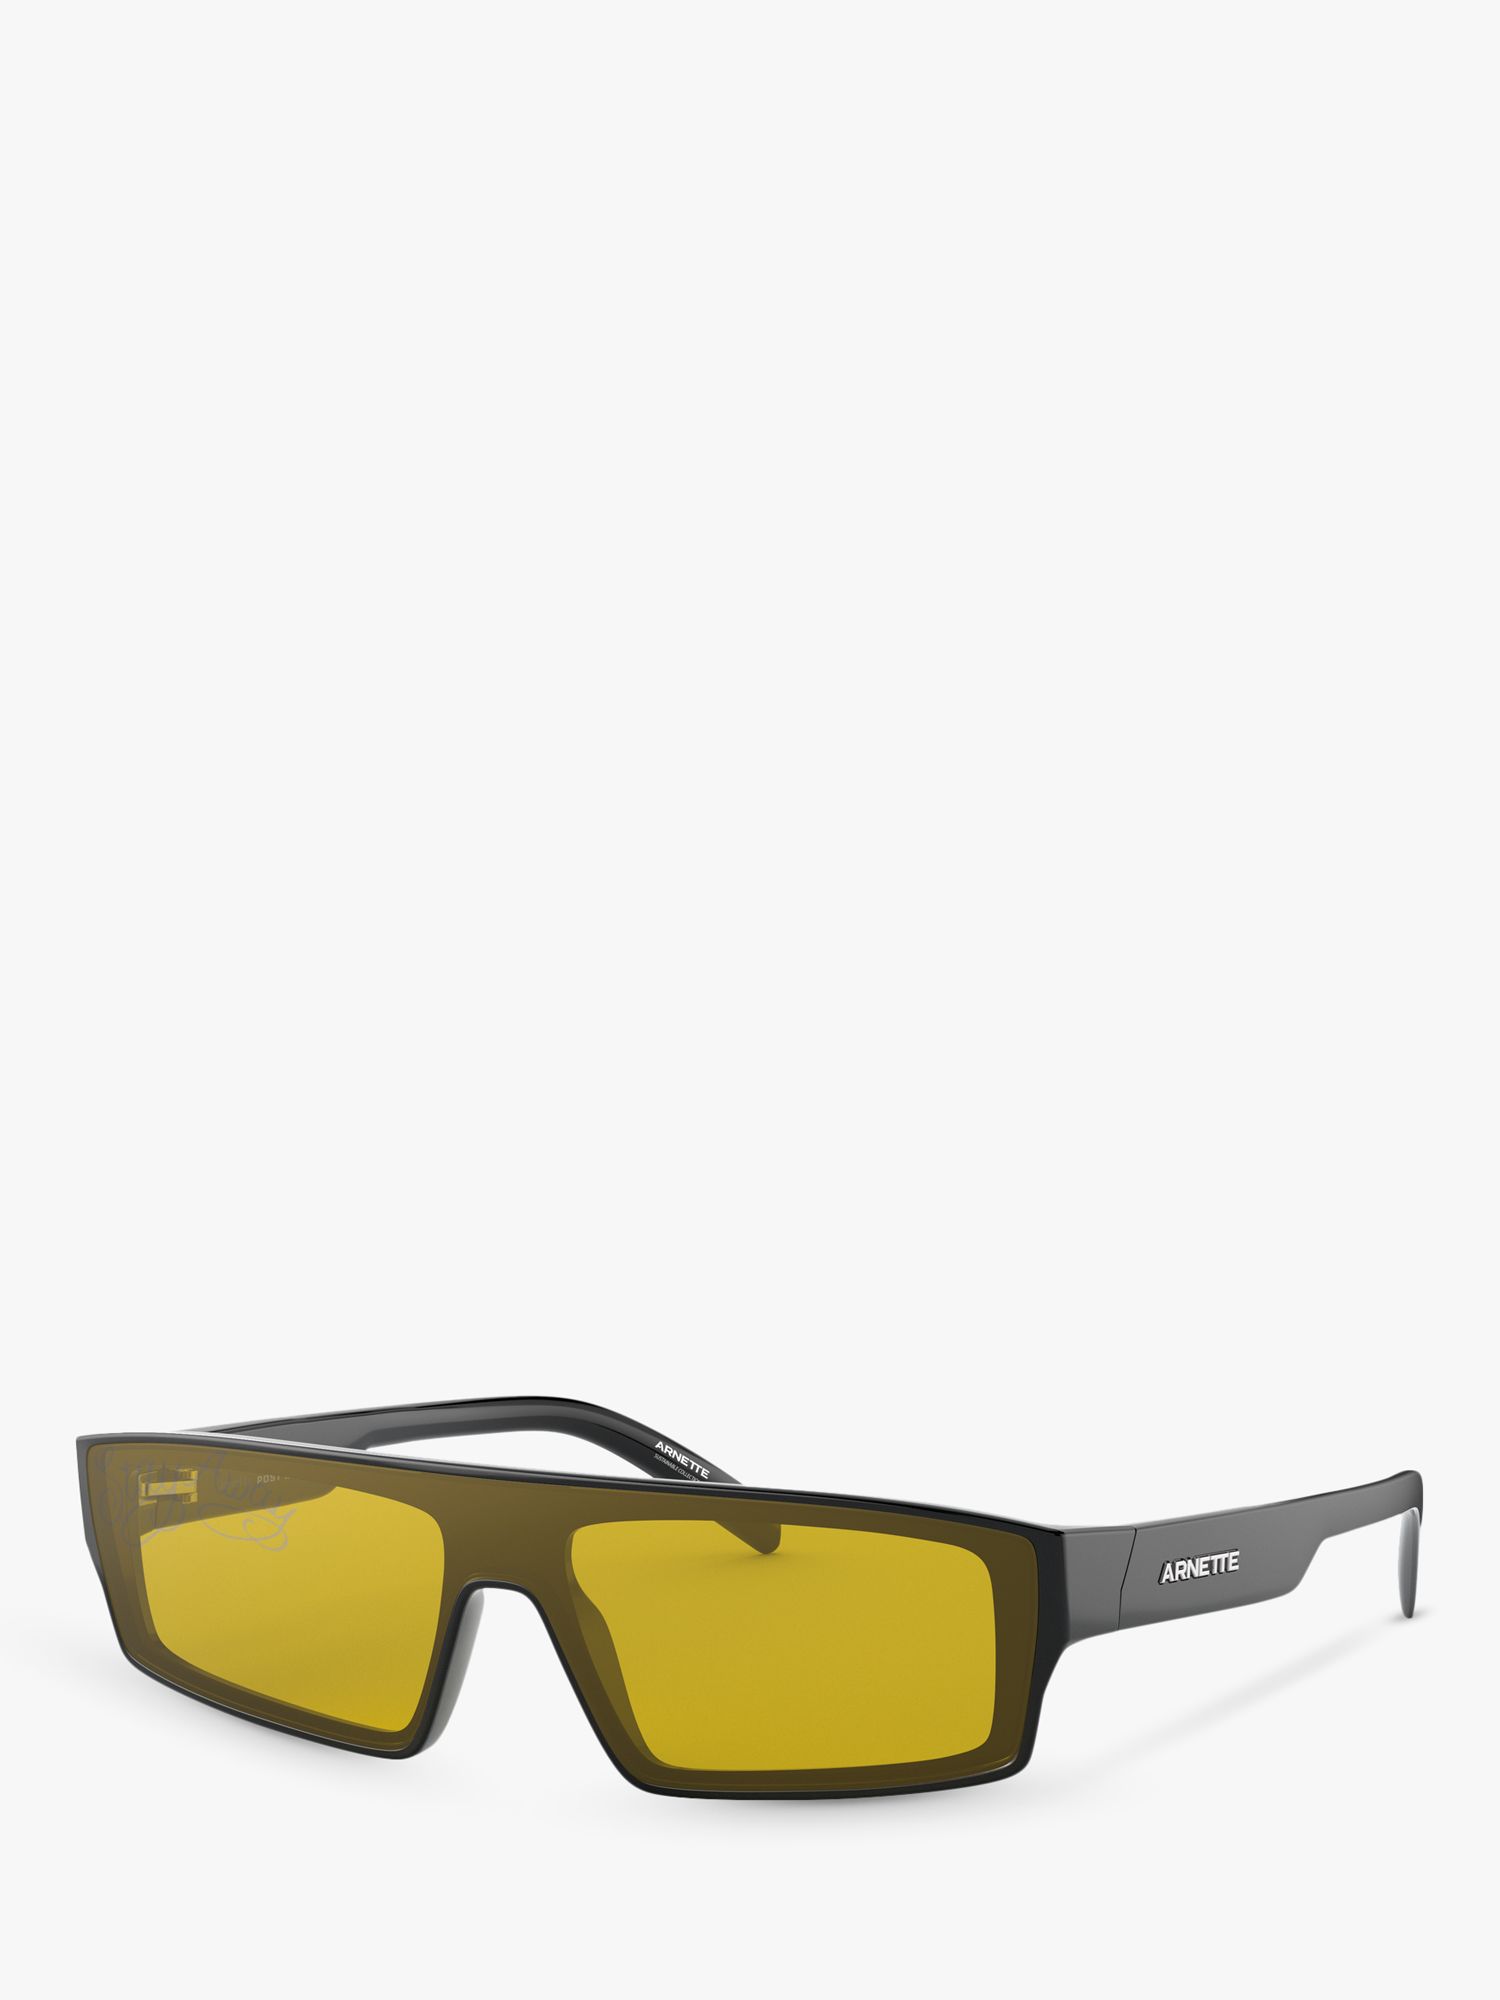 Arnette AN4268 Men's Rectangular Sunglasses, Black/Yellow at John Lewis ...